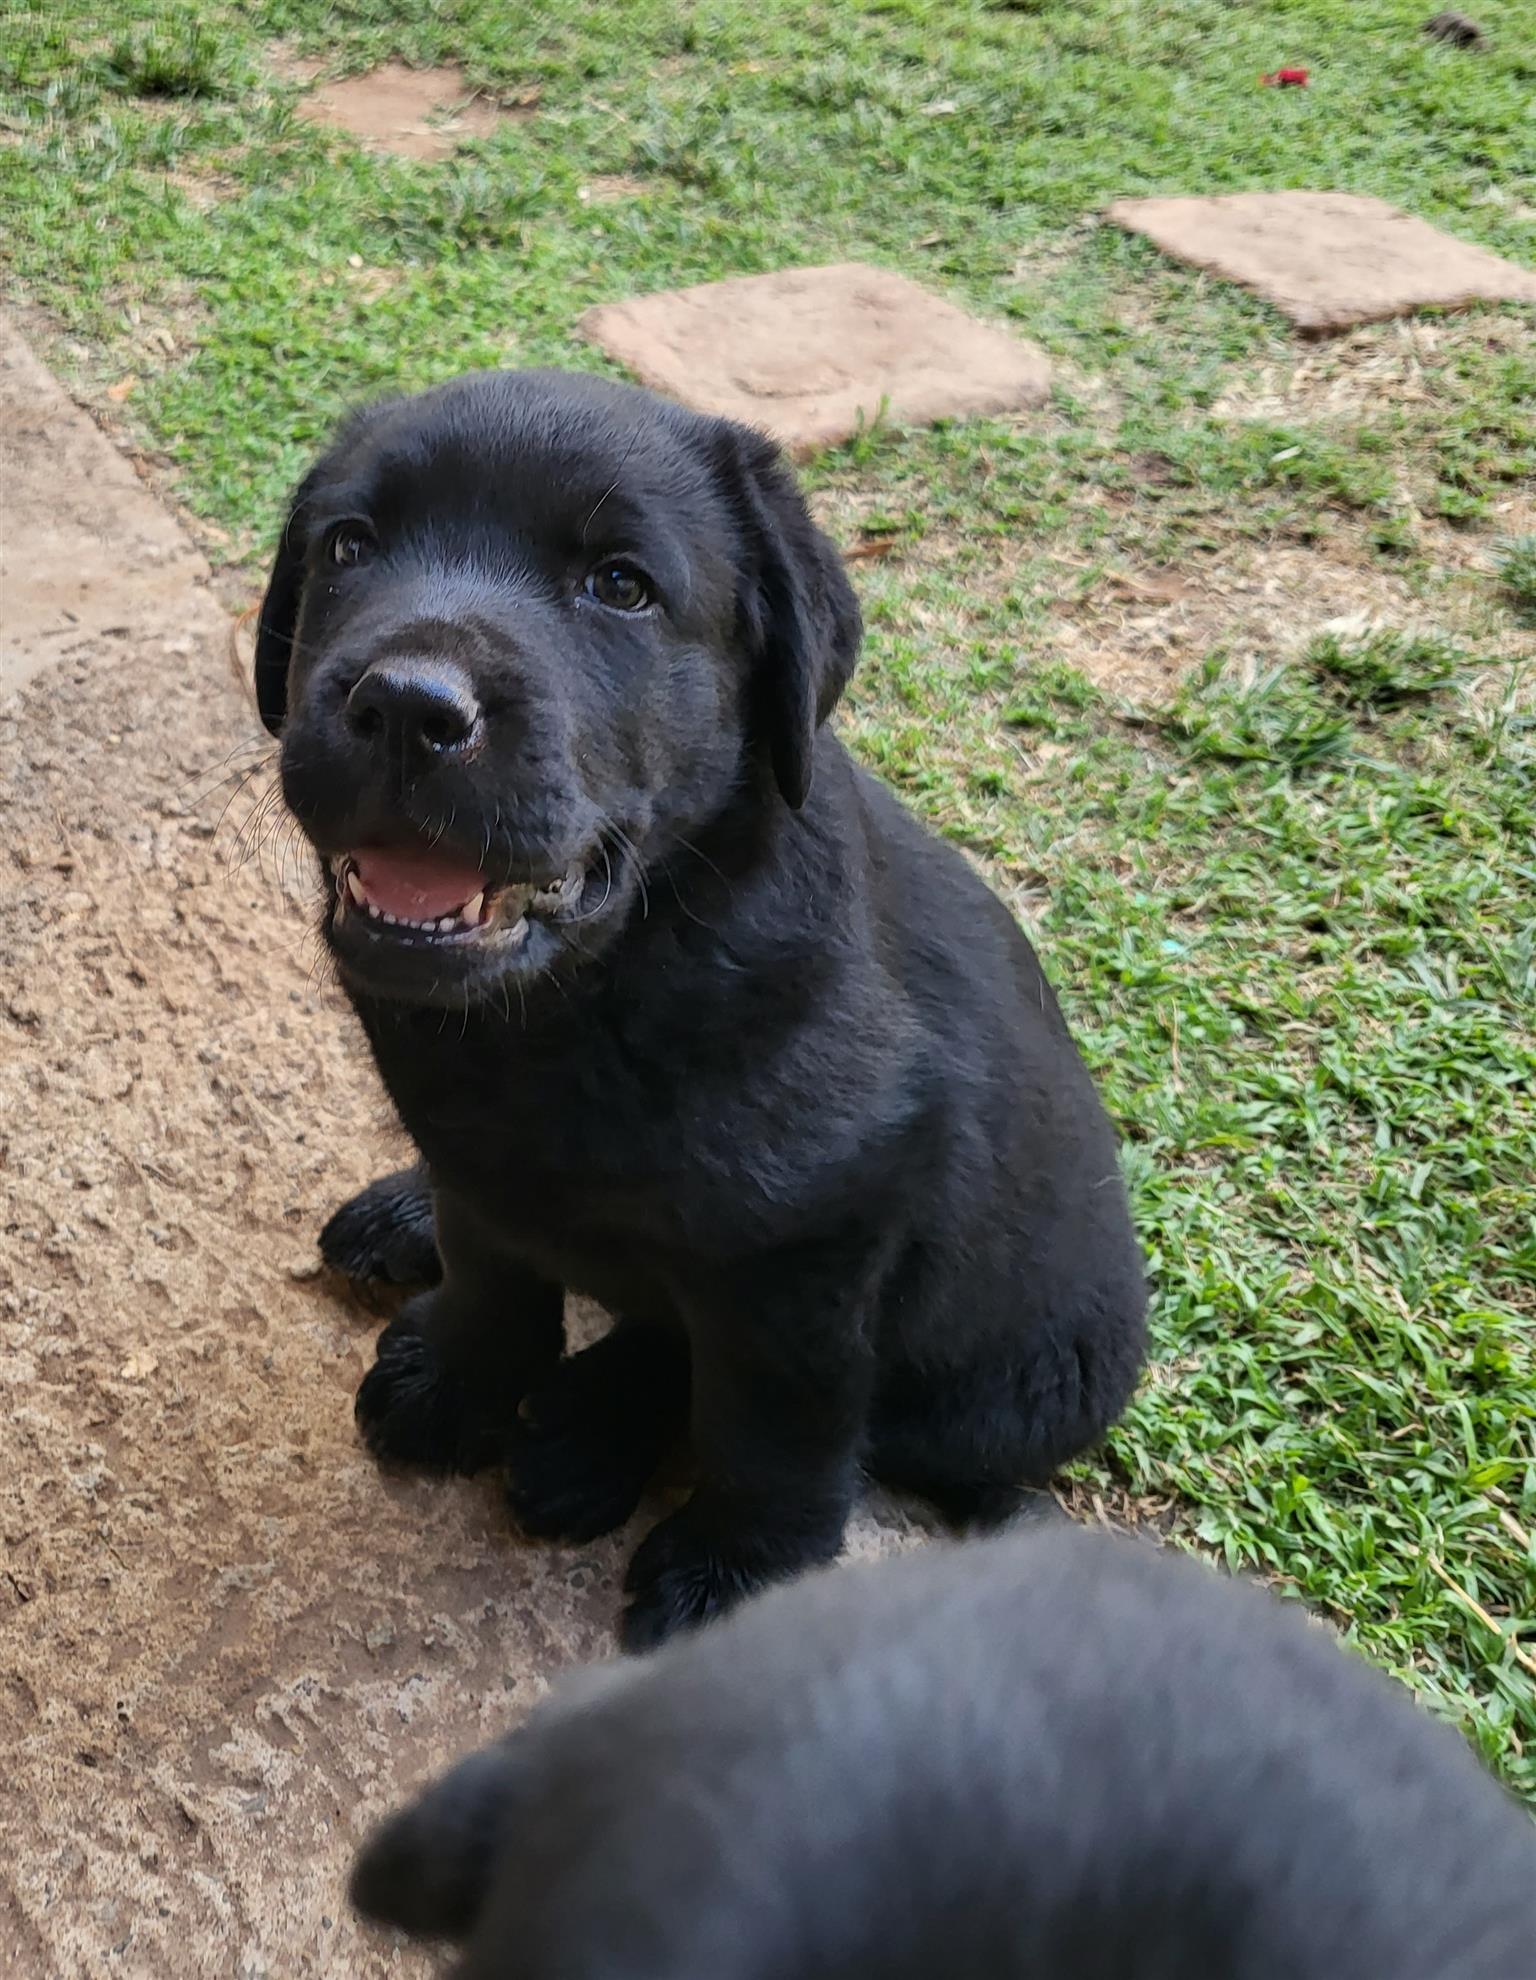 Labrador puppies for sale